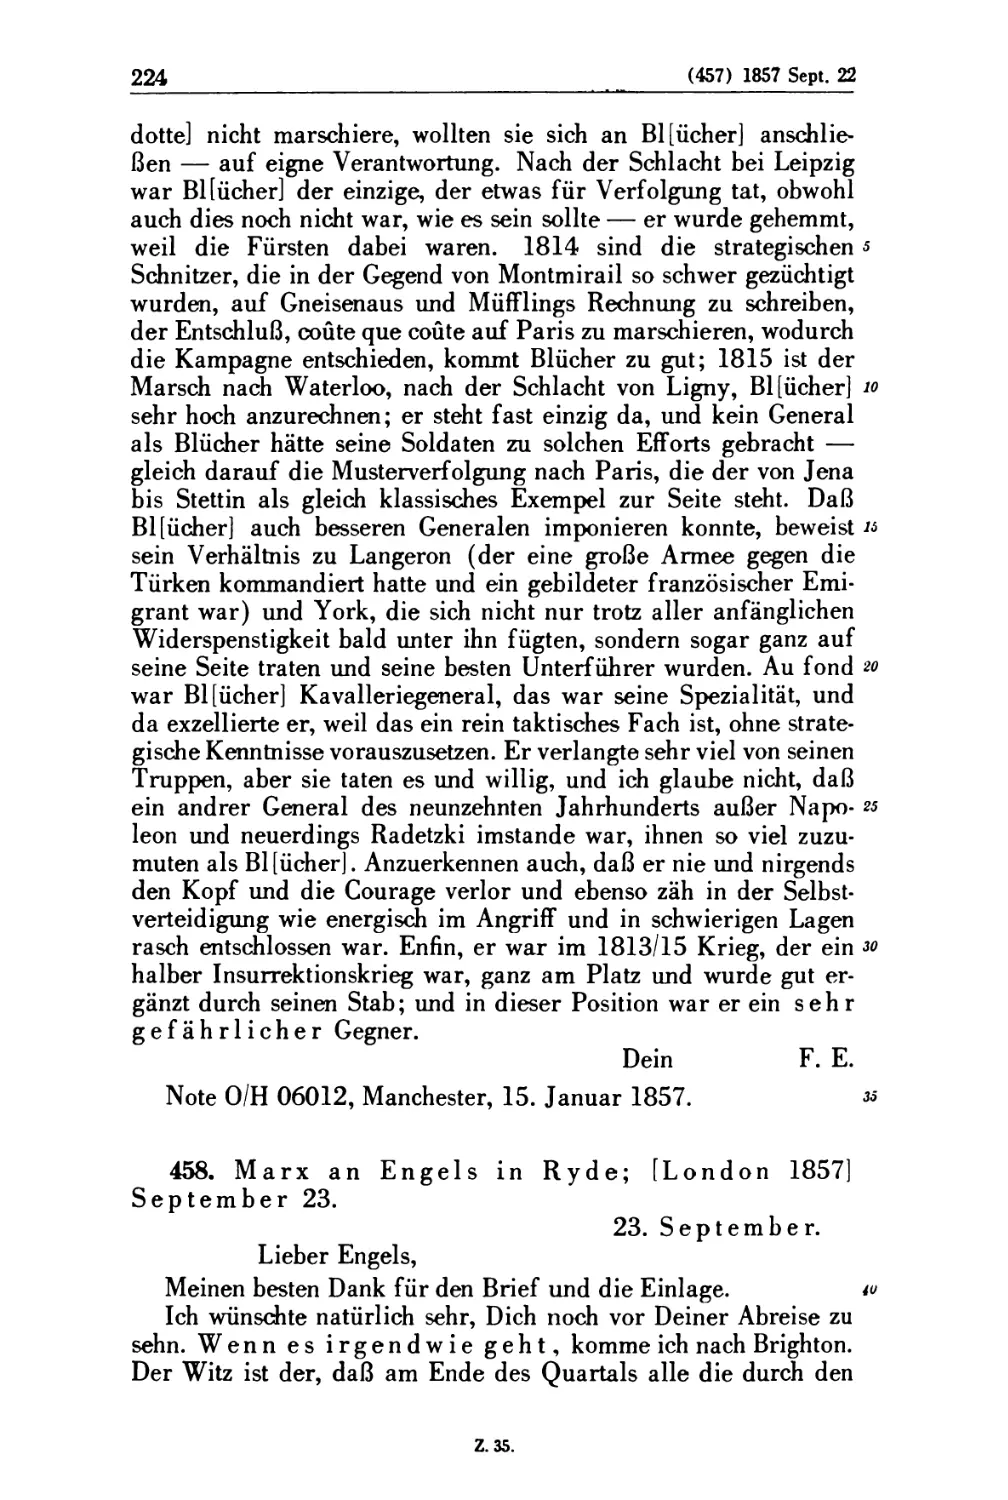 458. Marx an Engels in Ryde; [London 1857] September 23